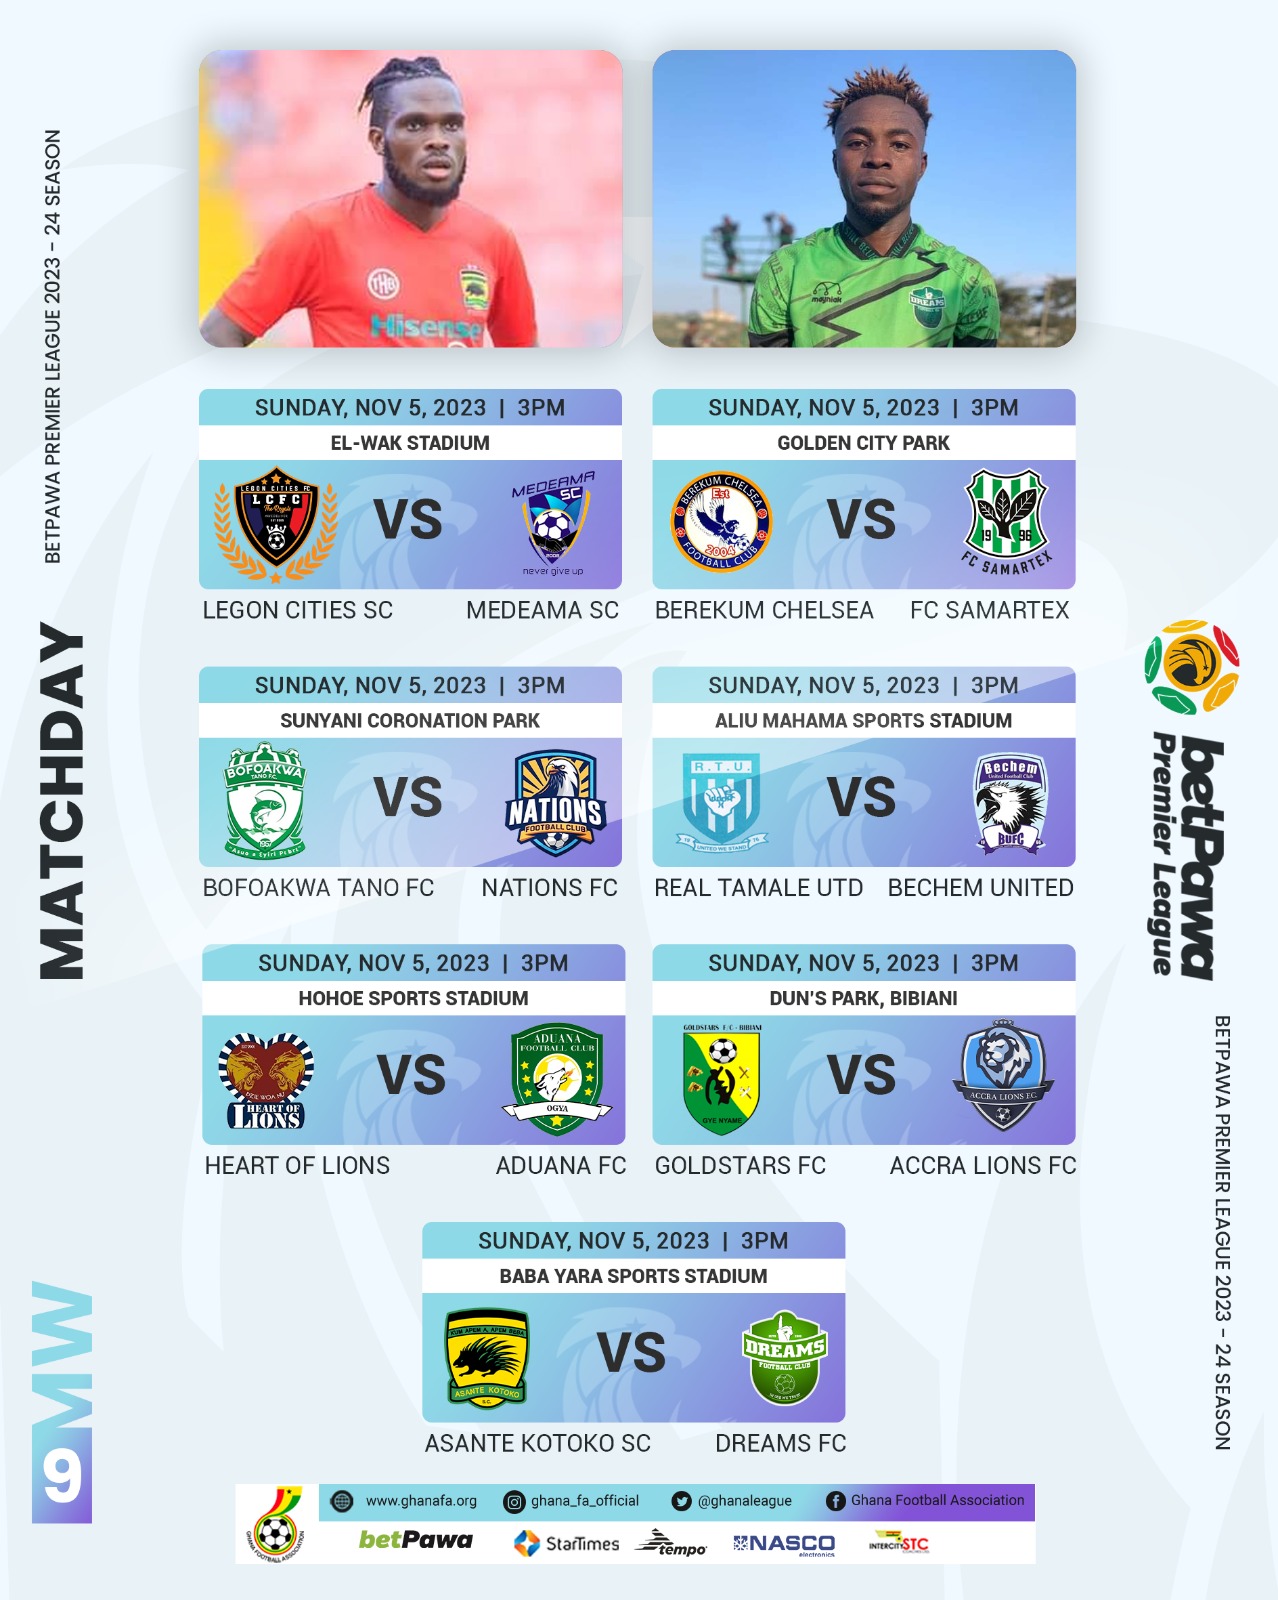 Asante Kotoko clash with Dreams FC, Lions host Aduana FC Sunday